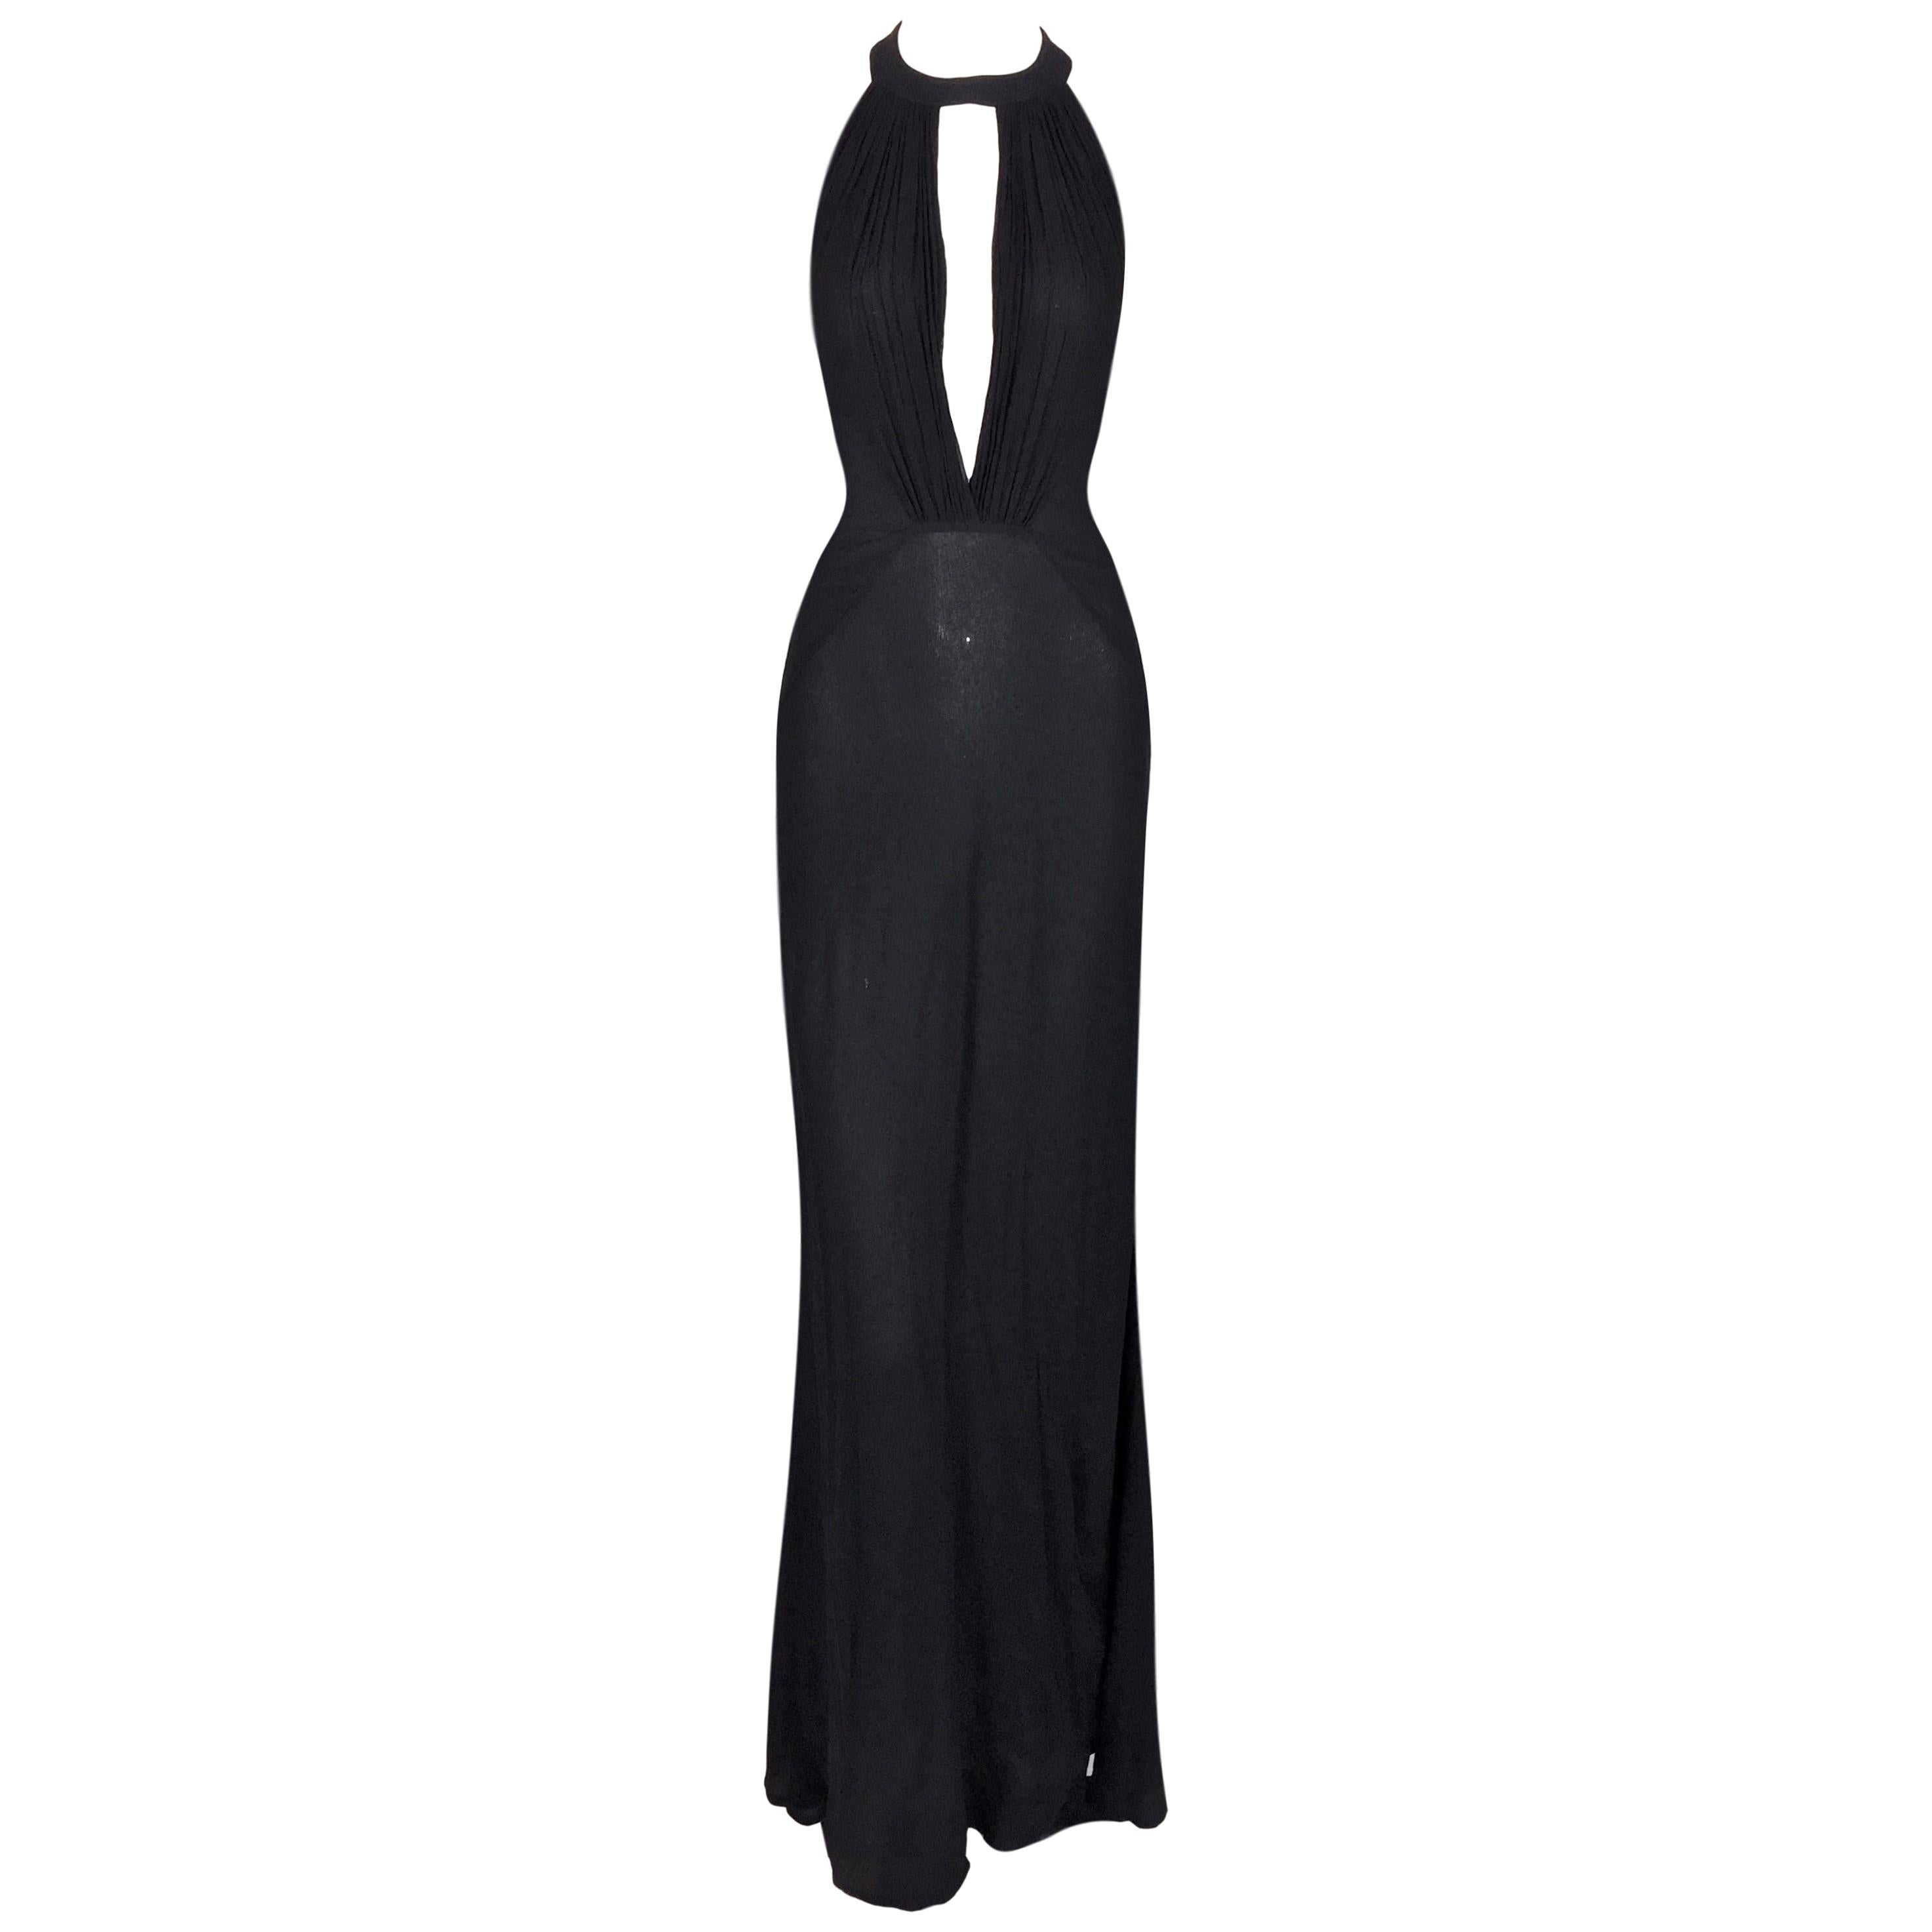 C. 2000 Gianni Versace Sheer Black Silk Plunging Grecian Gown Dress